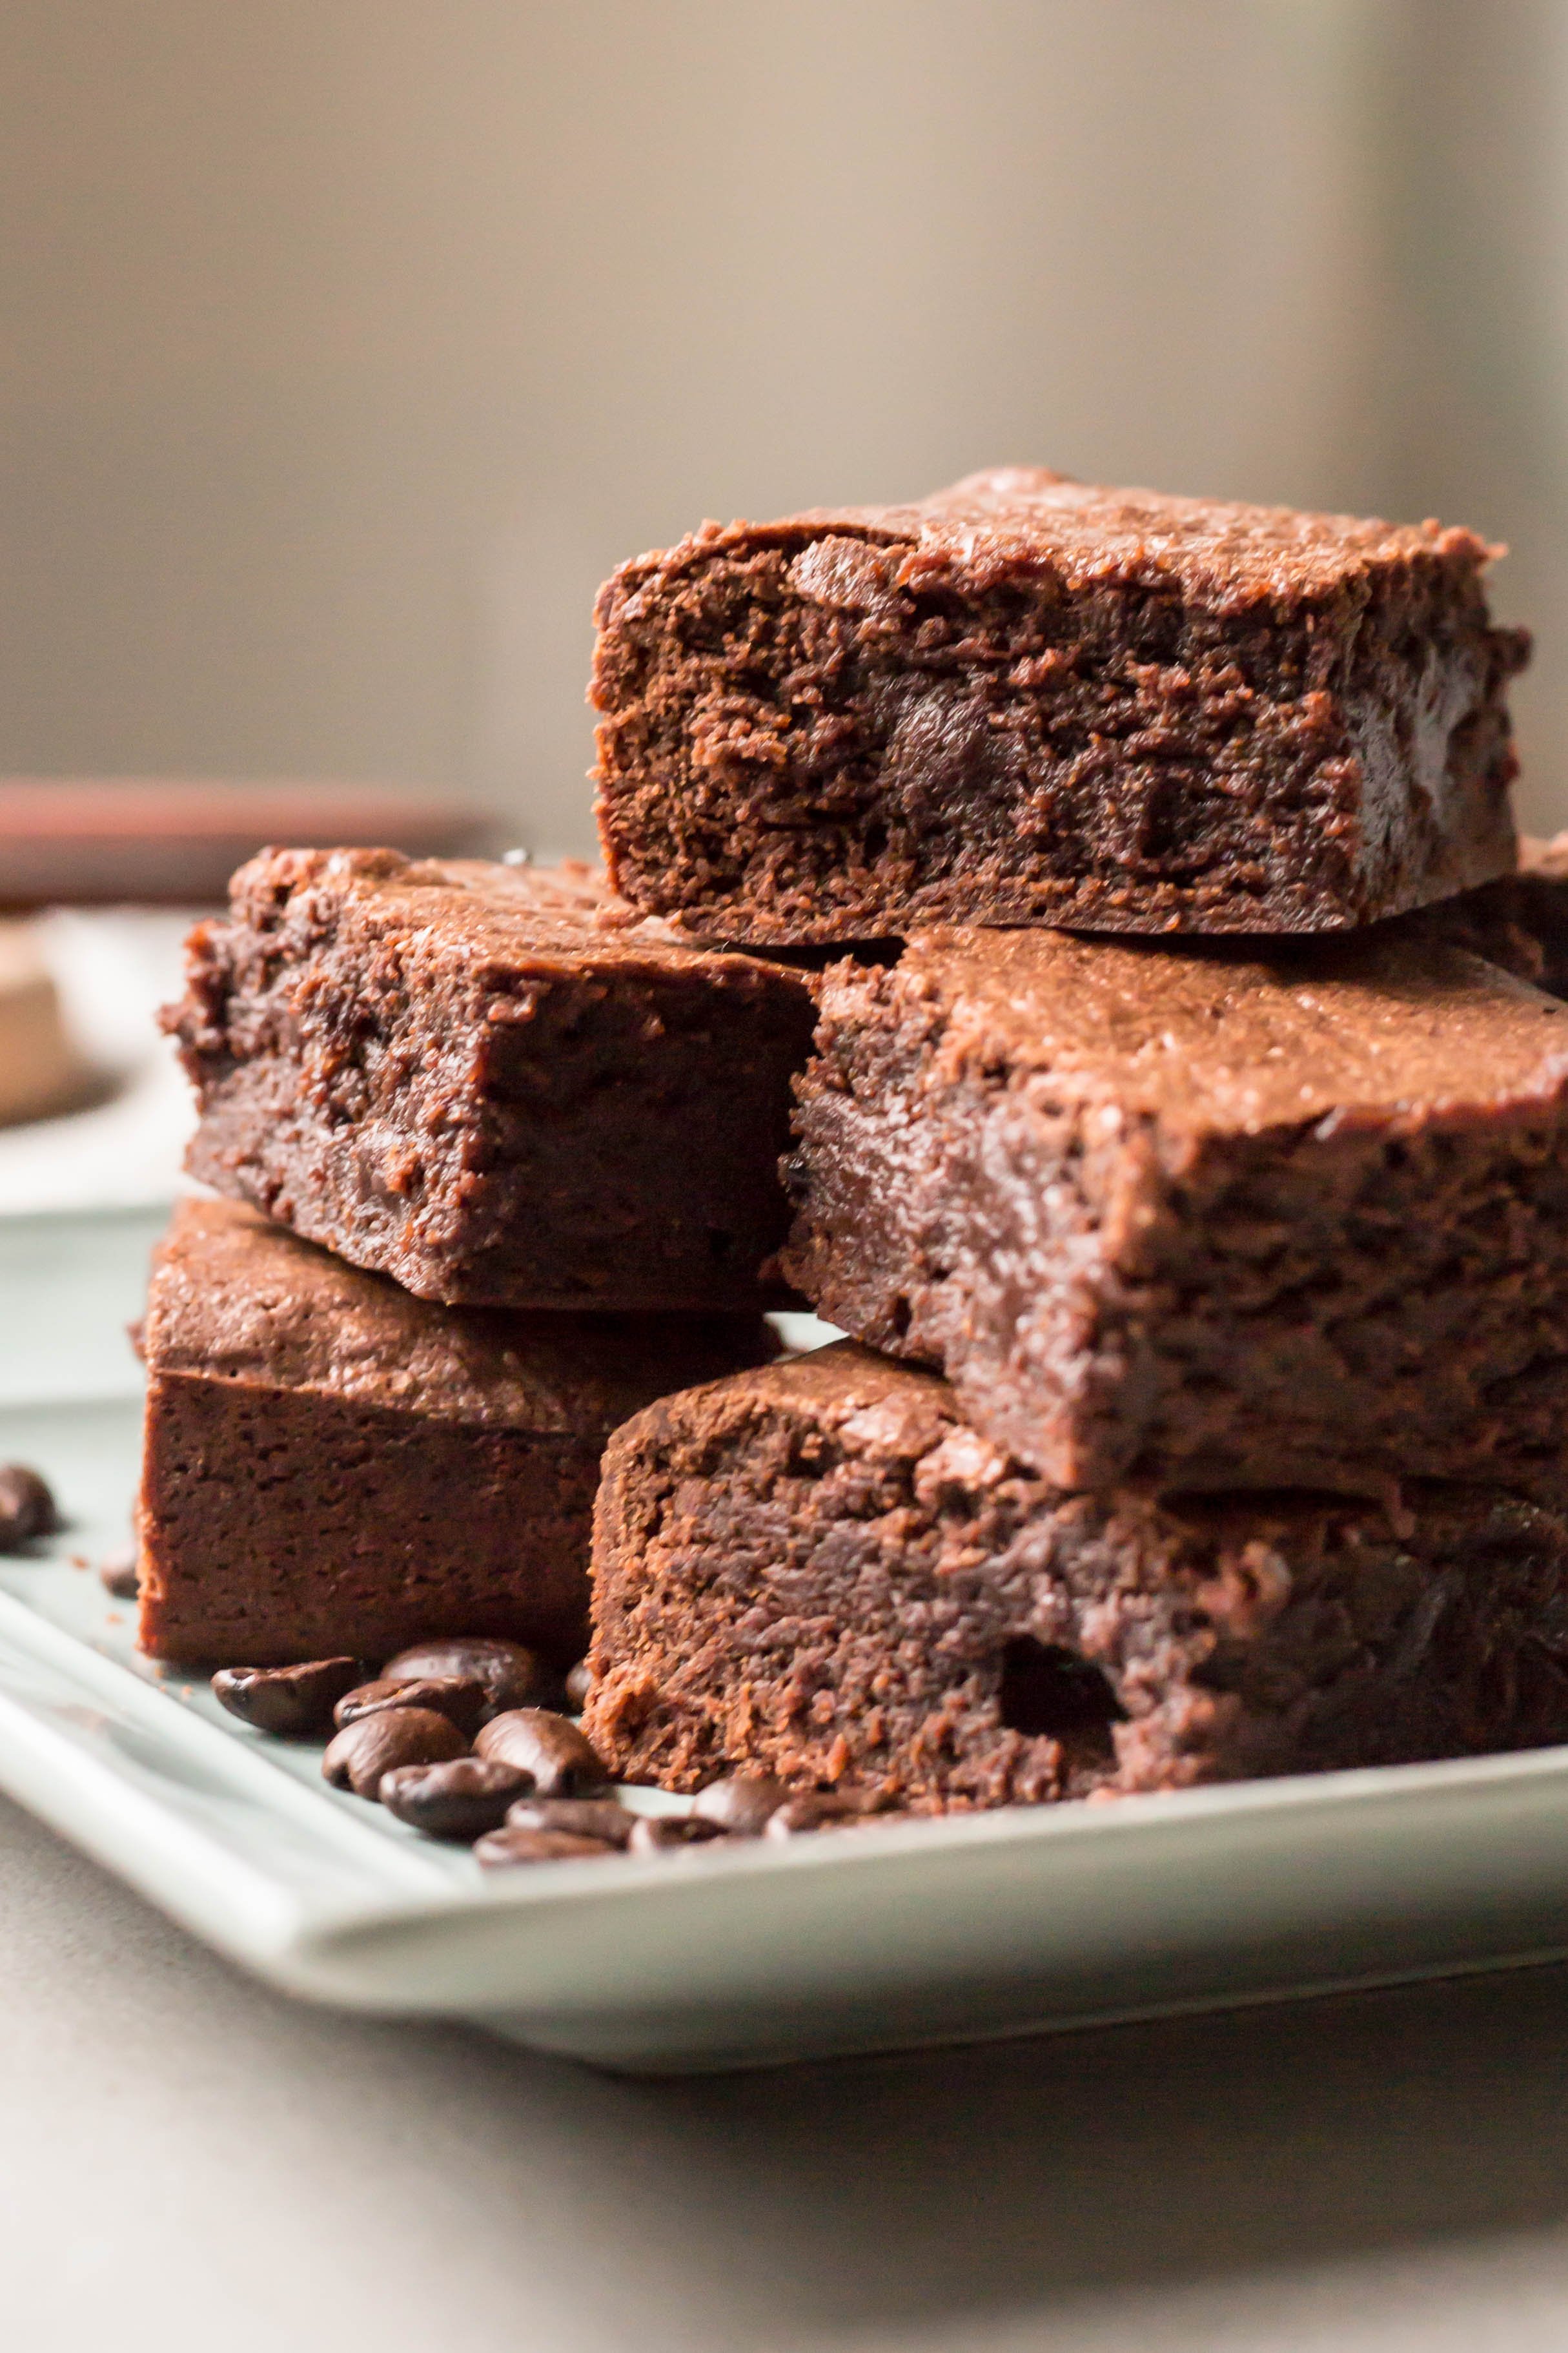 Брауни 1. Шоколадный Брауни. Шоколадное пирожное Брауни. Торт Брауни шоколадный. Американский десерт Брауни.